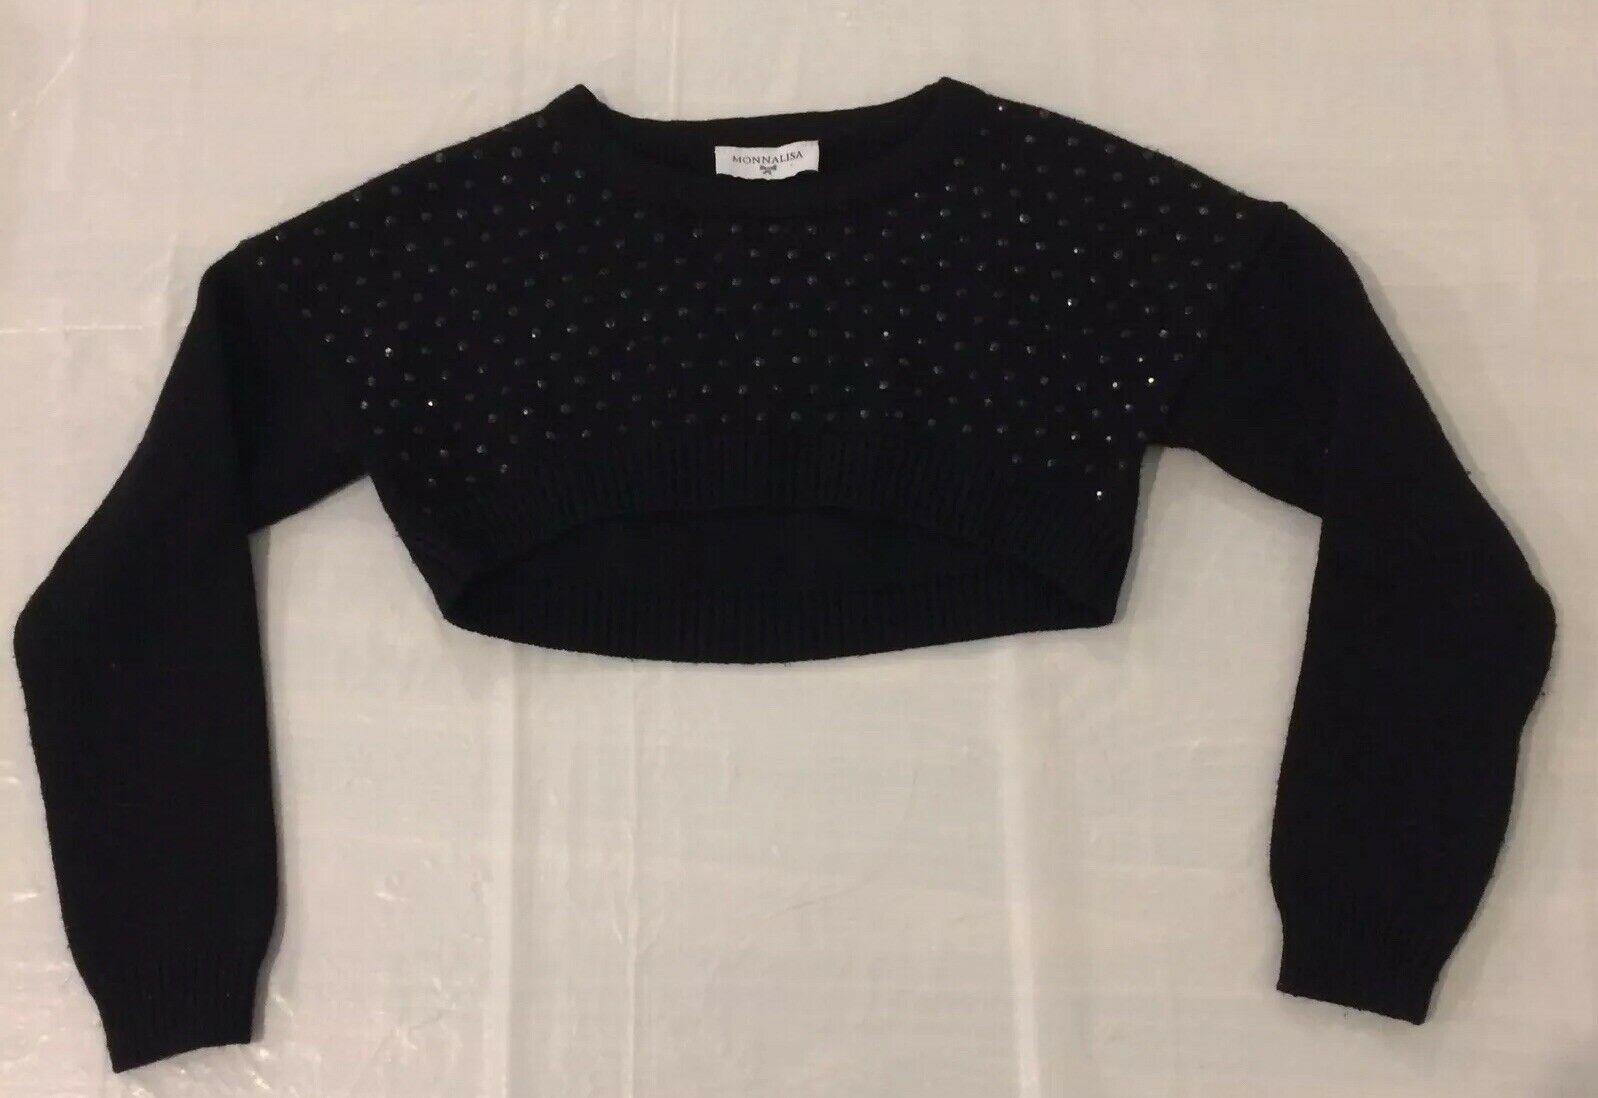 Monnalisa Black Sparkly Bolero Half Sweater Girl’s Size 4t